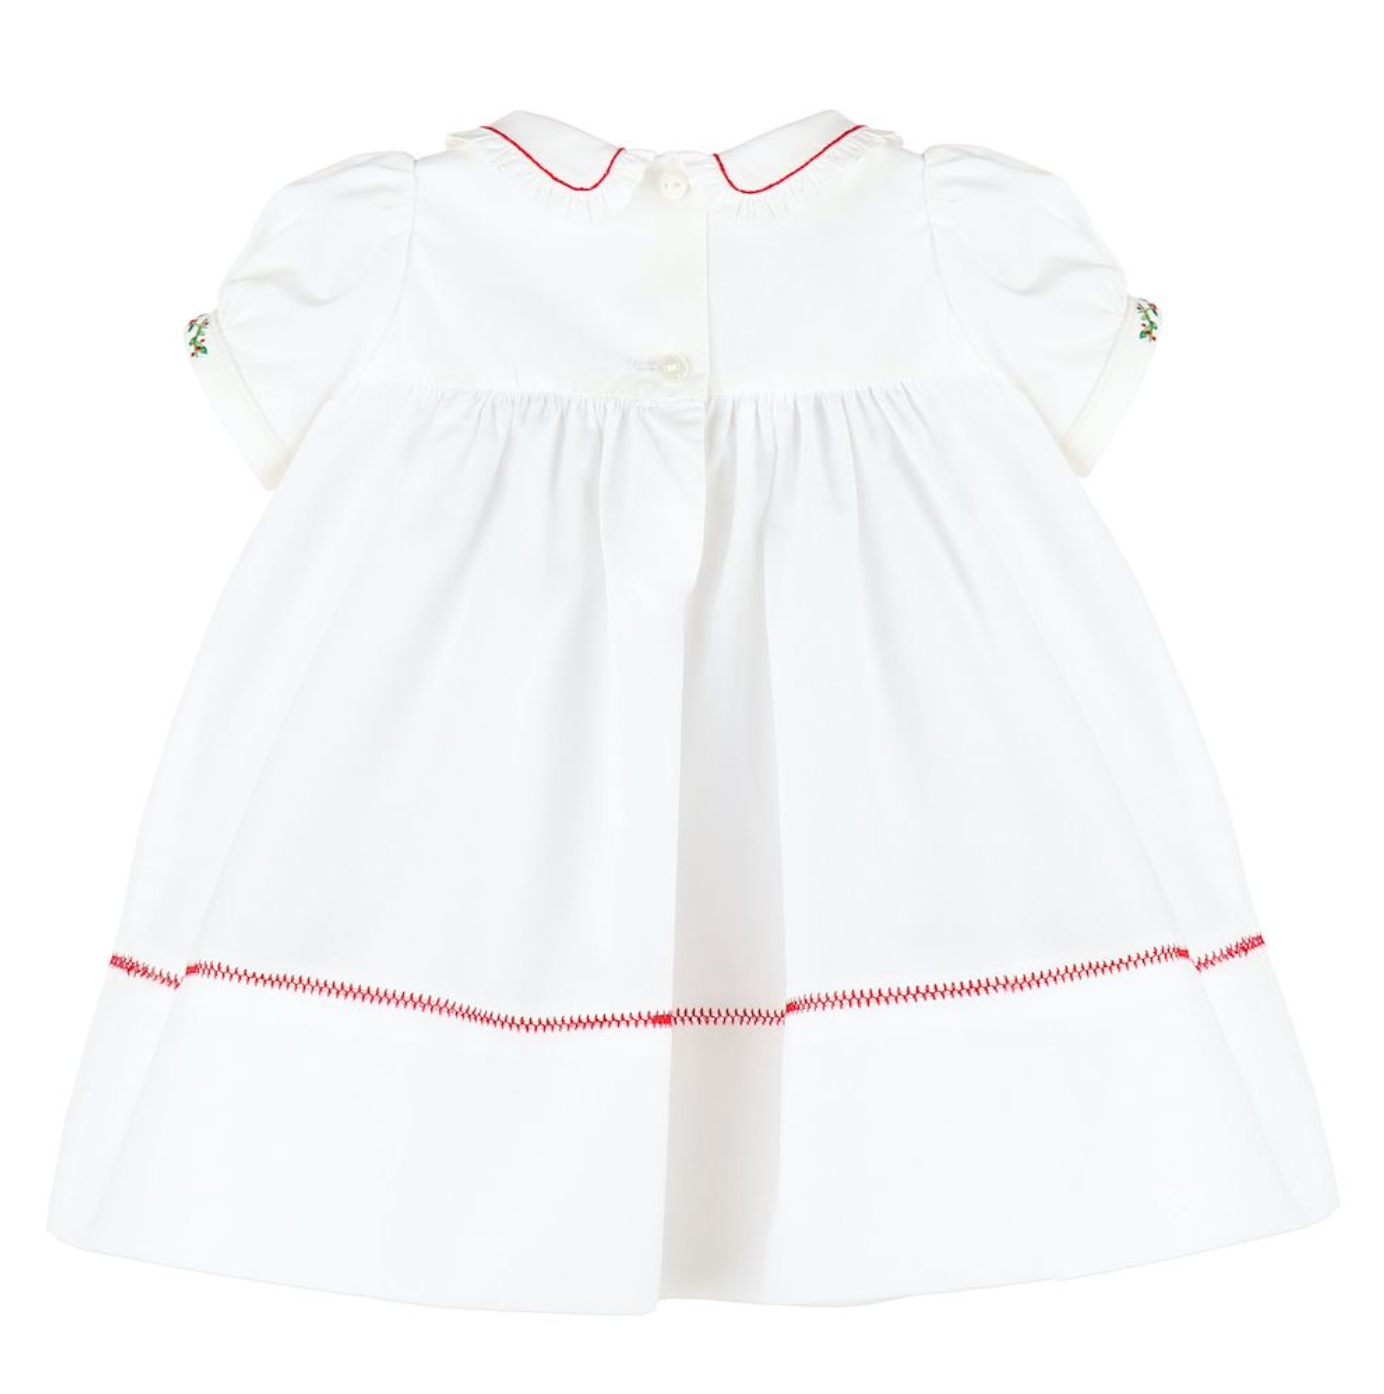 White Merrymaker Scallop Dress